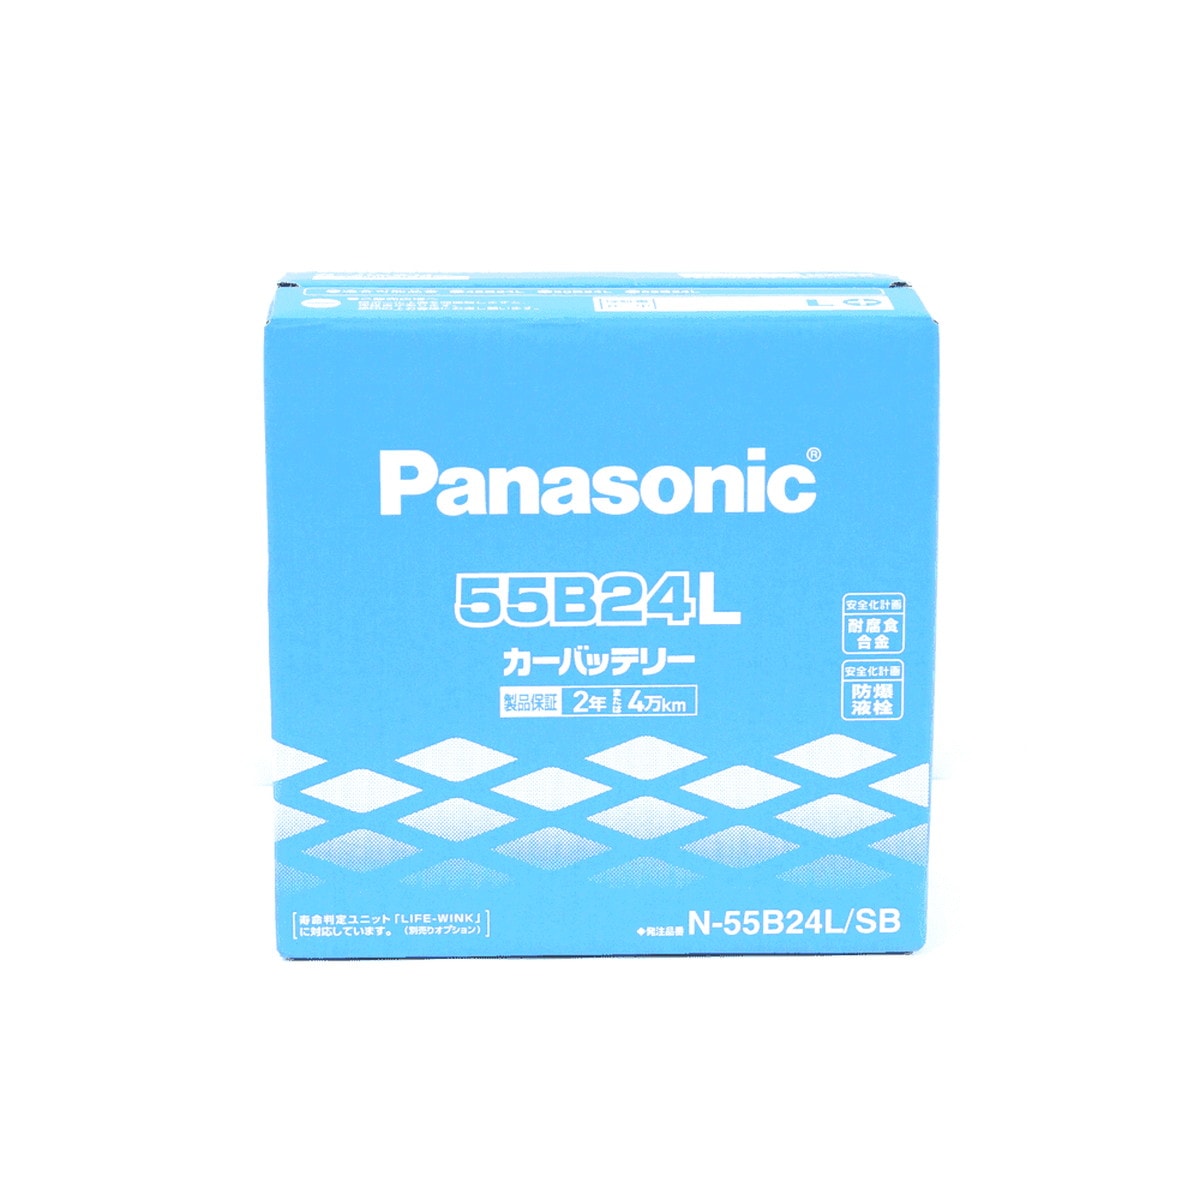 Panasonic N-55B24L/SB トヨタ エスティマ(R1) パナソニック PANASONIC 国産車用バッテリー 送料無料 新品